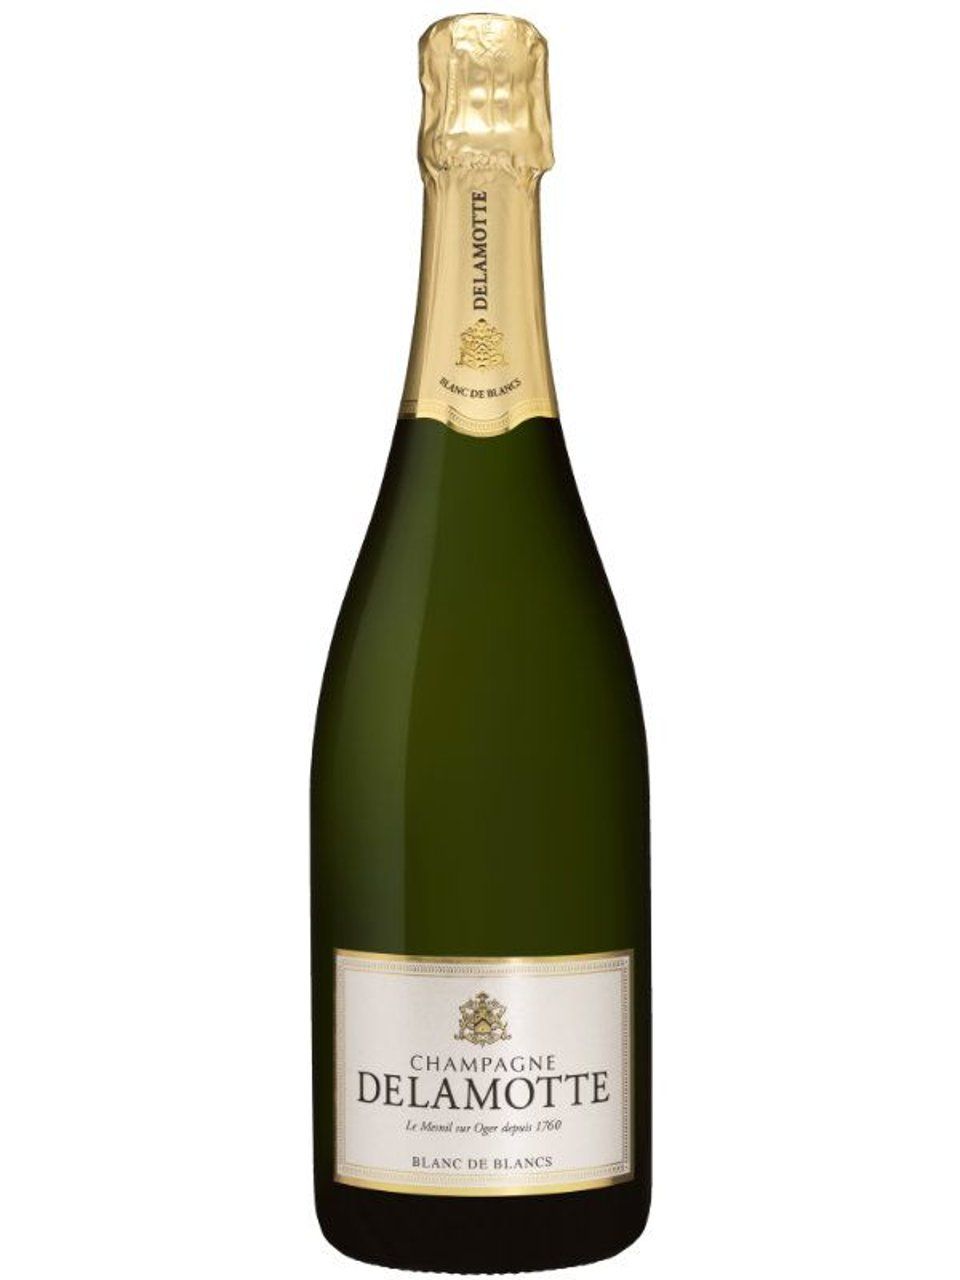 Delamotte Champagne Blanc de Blancs